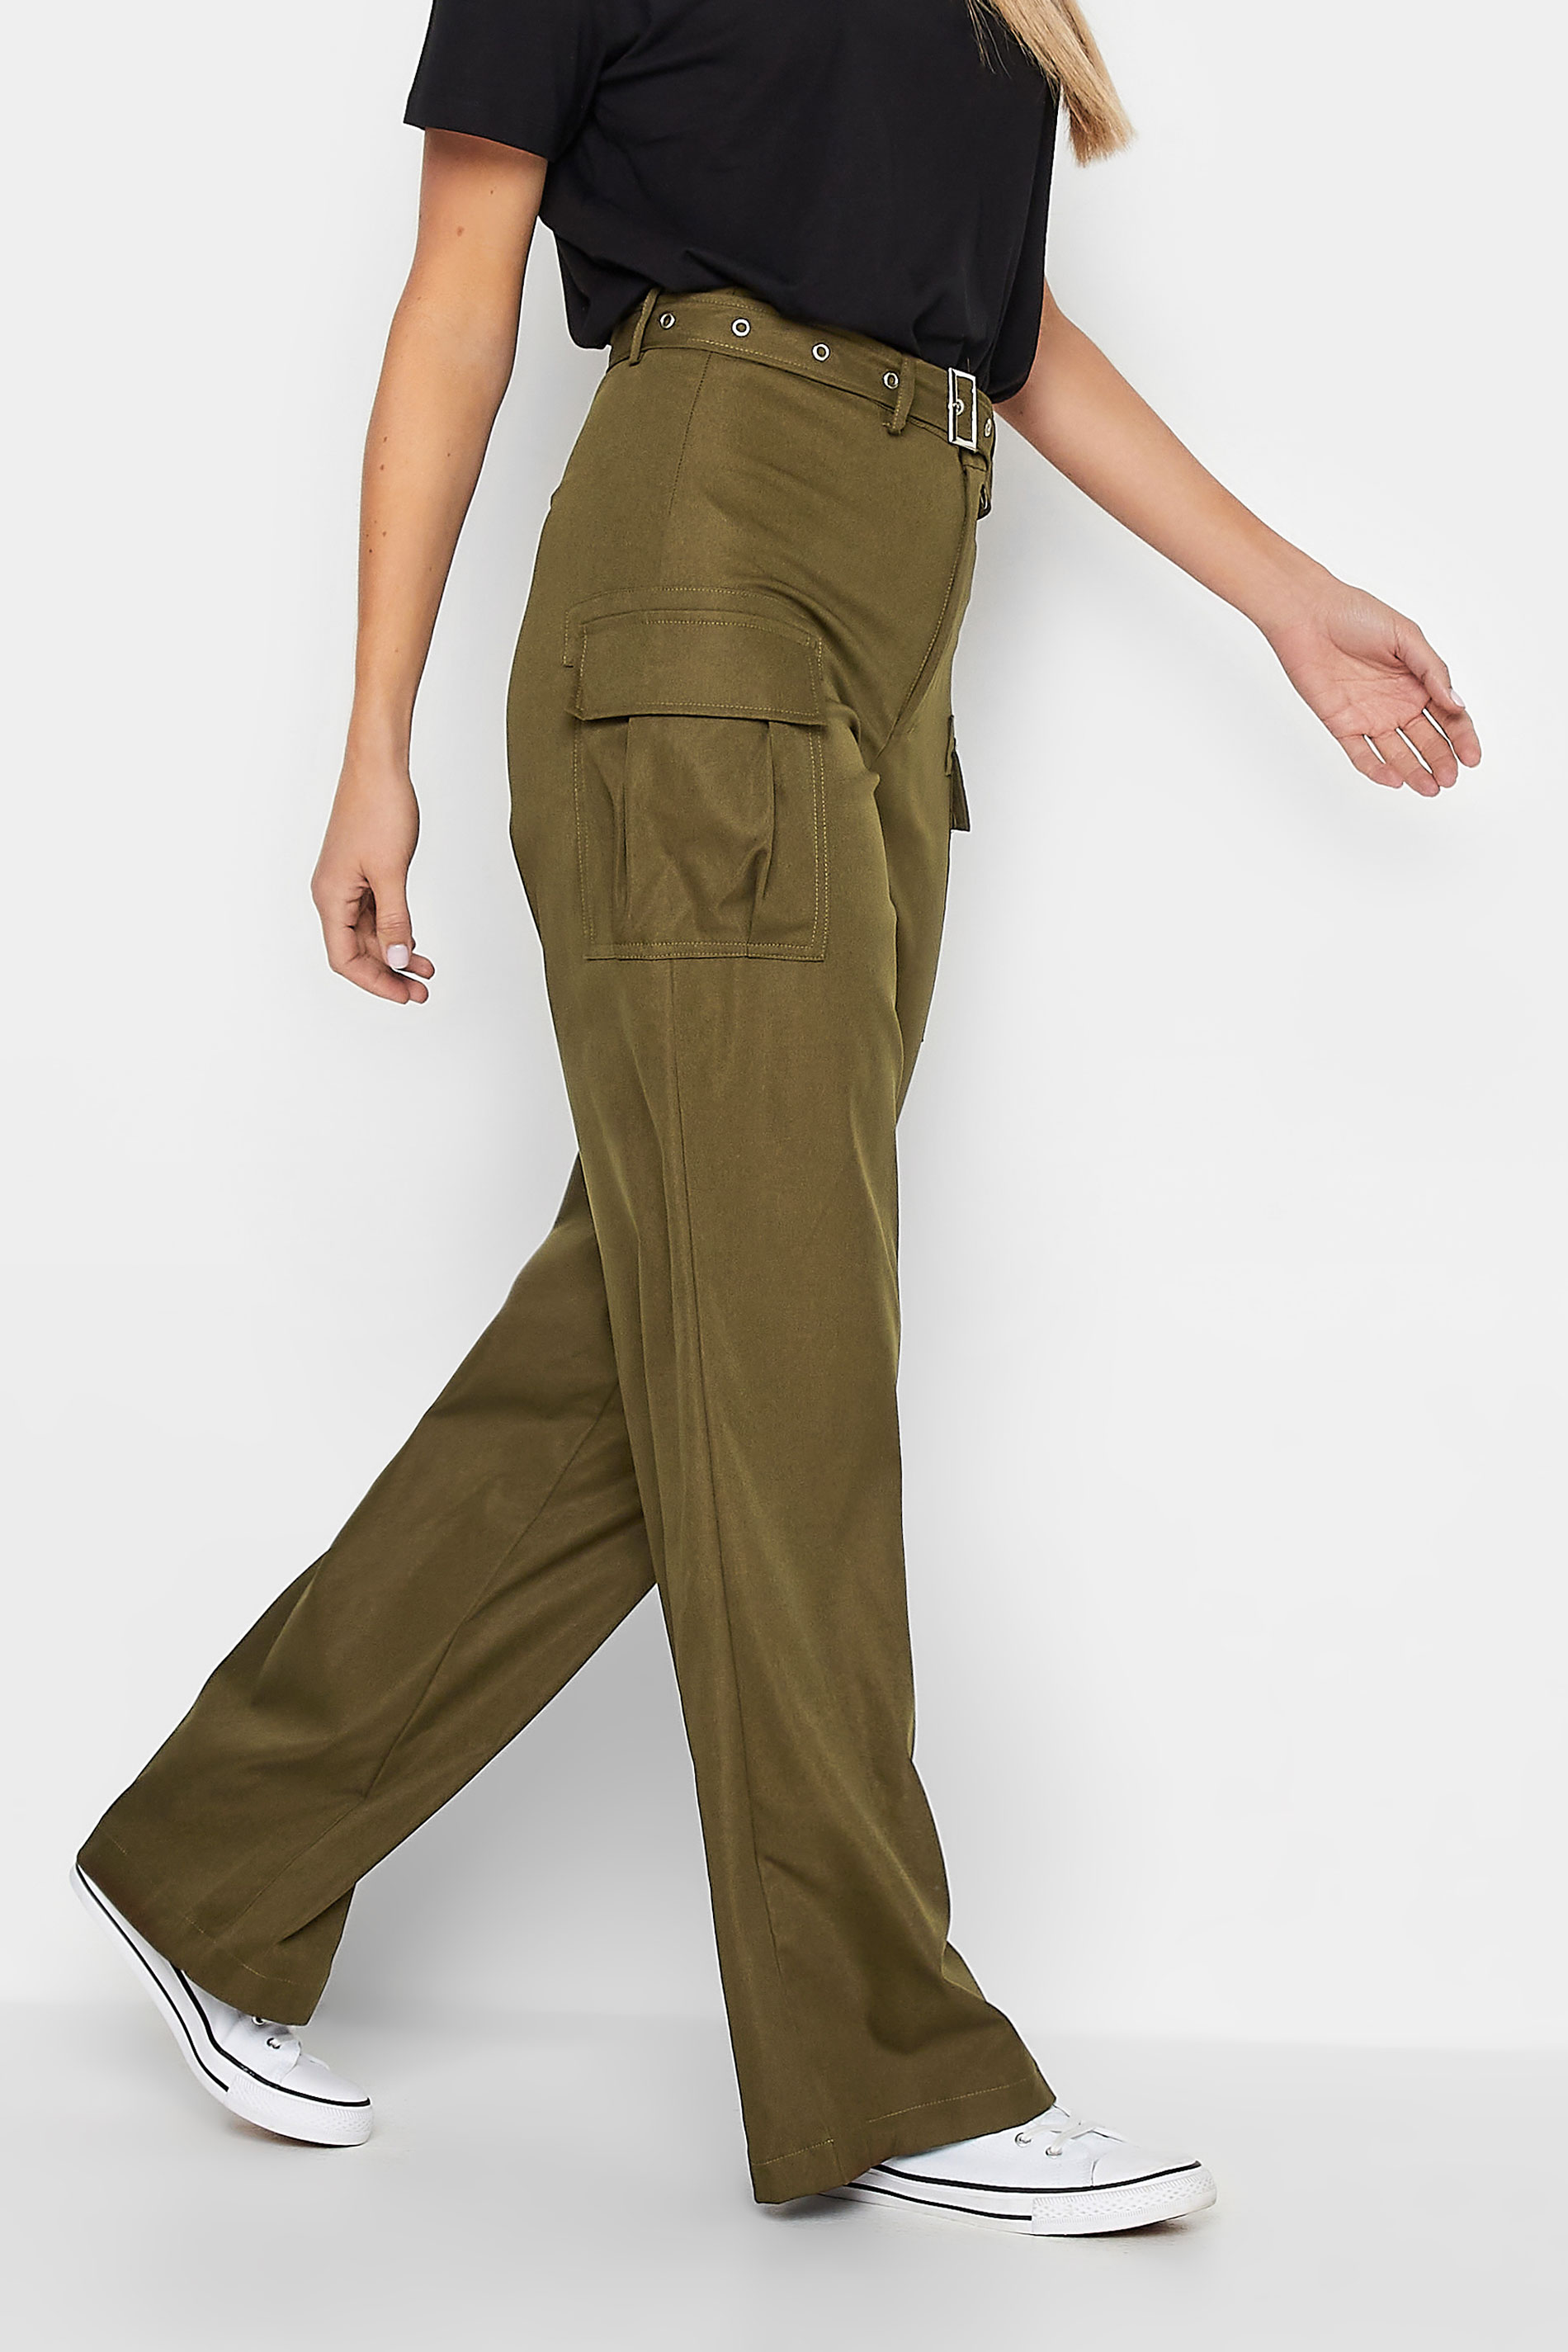 GU Super Wide Cargo Pants #P0731 💥พร้อมส่ง💥 . ราคา 1,690 บาท . Color:  Army Green, Black, White Size: ... | Instagram